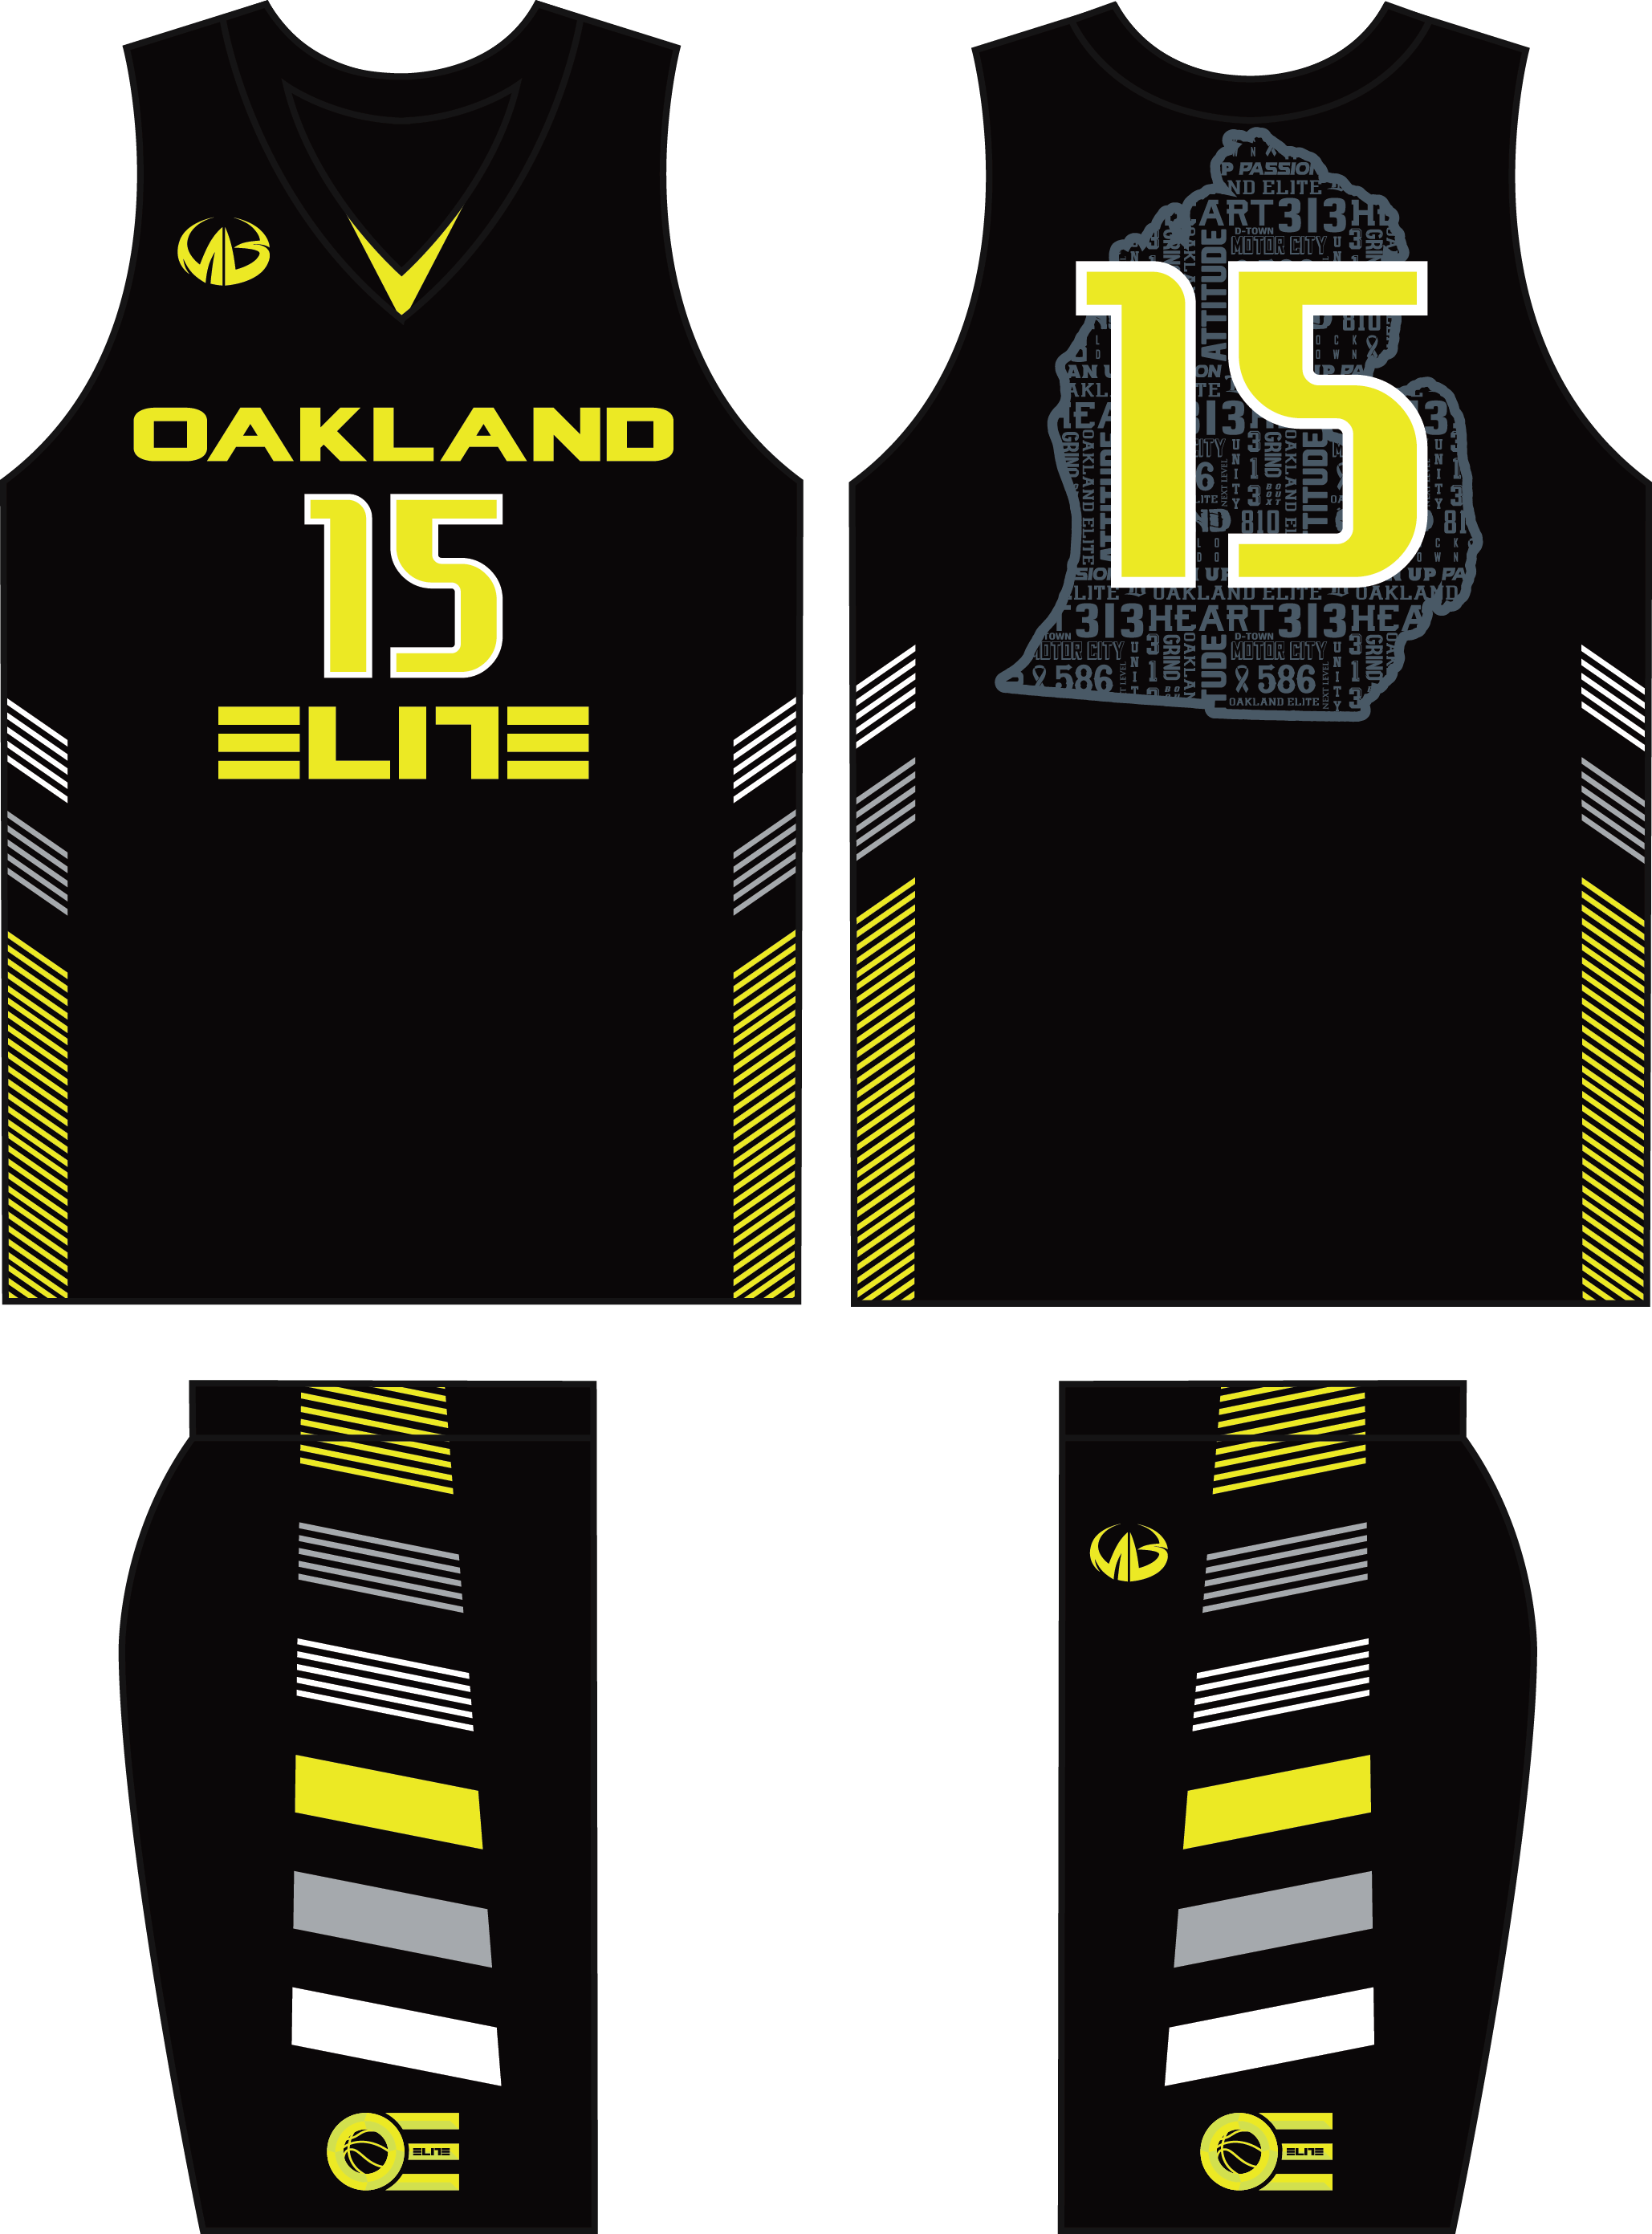 Oakland Elite - Black Game Uniforms